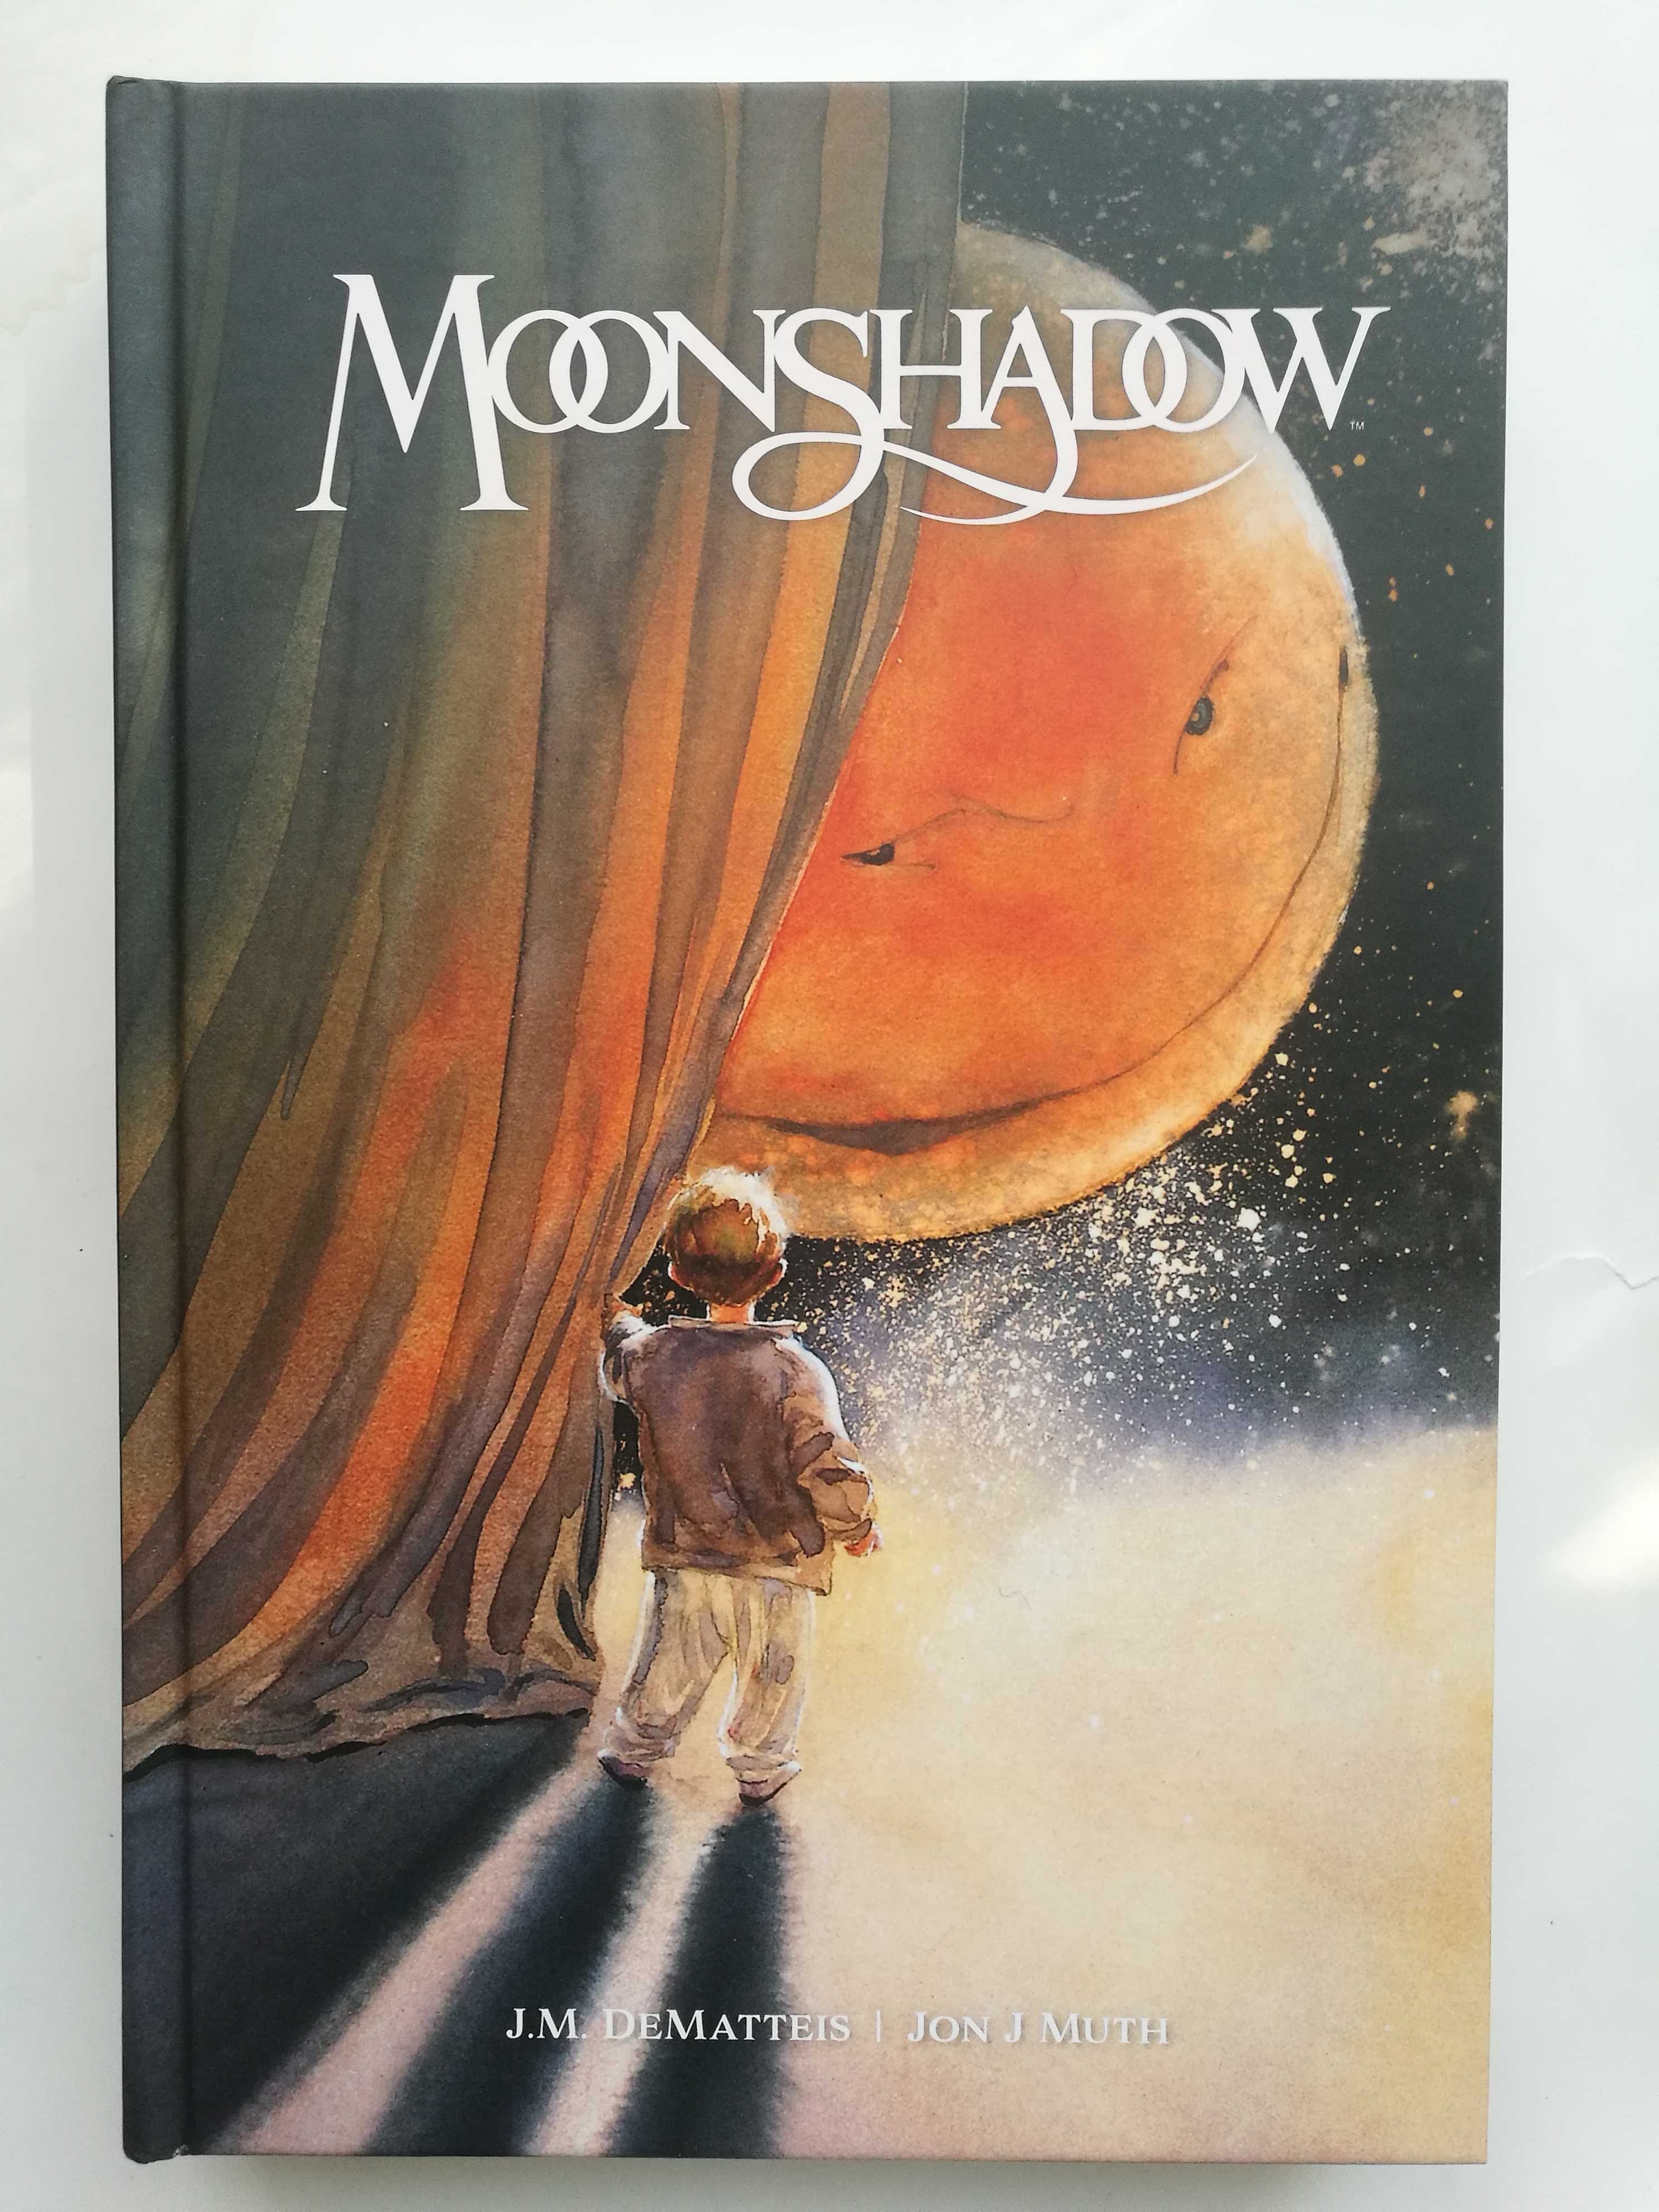 Moonshadow (J.M. DeMatteis, Jon J. Muth)